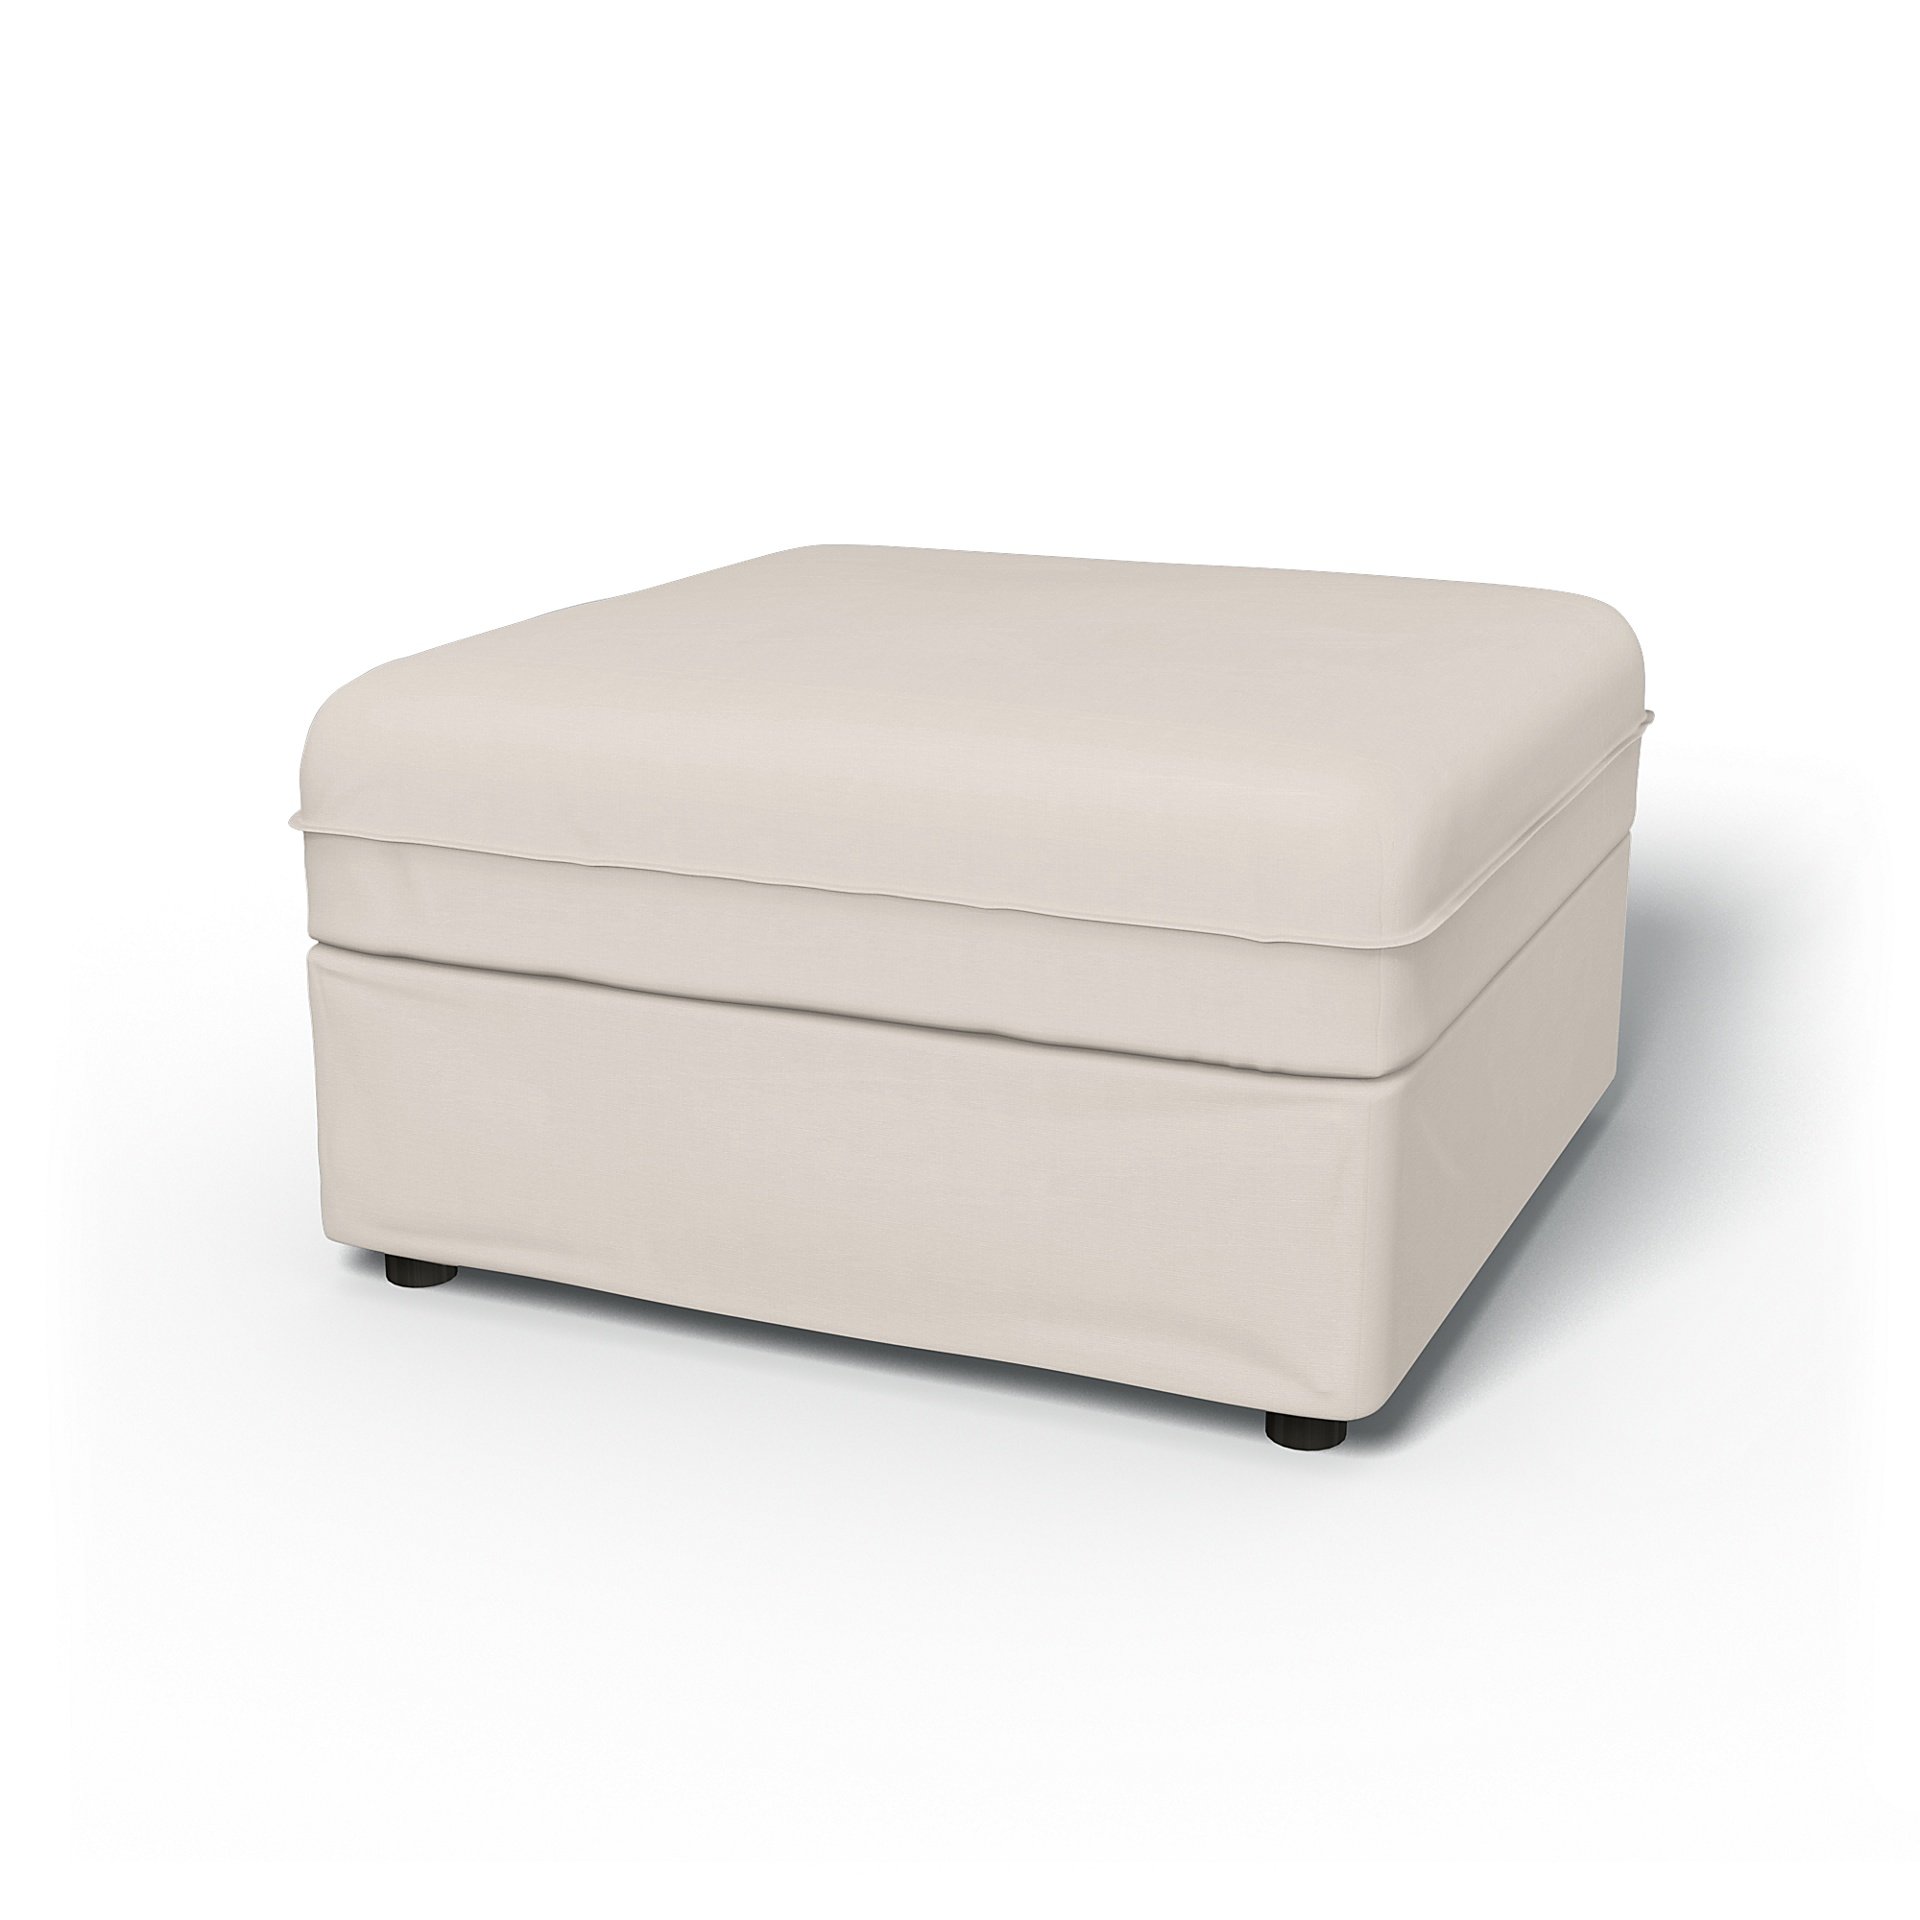 IKEA - Vallentuna Seat Module with Storage Cover 80x80cm 32x32in, Soft White, Cotton - Bemz